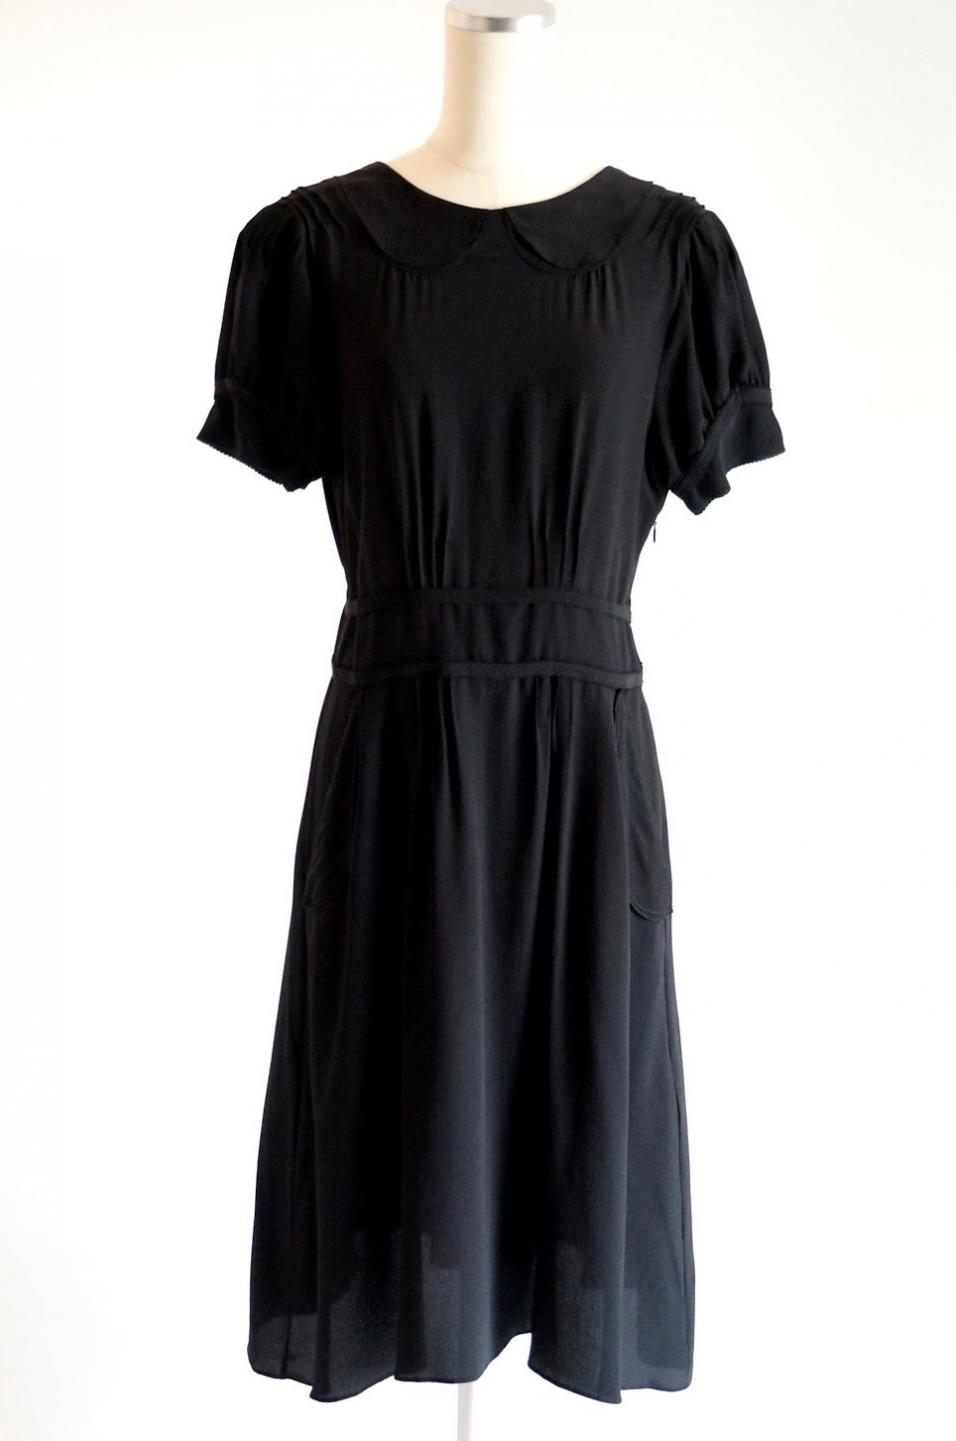 FENDI / レンタルリトルブラックドレス テン Rental Little Black Dress ten.